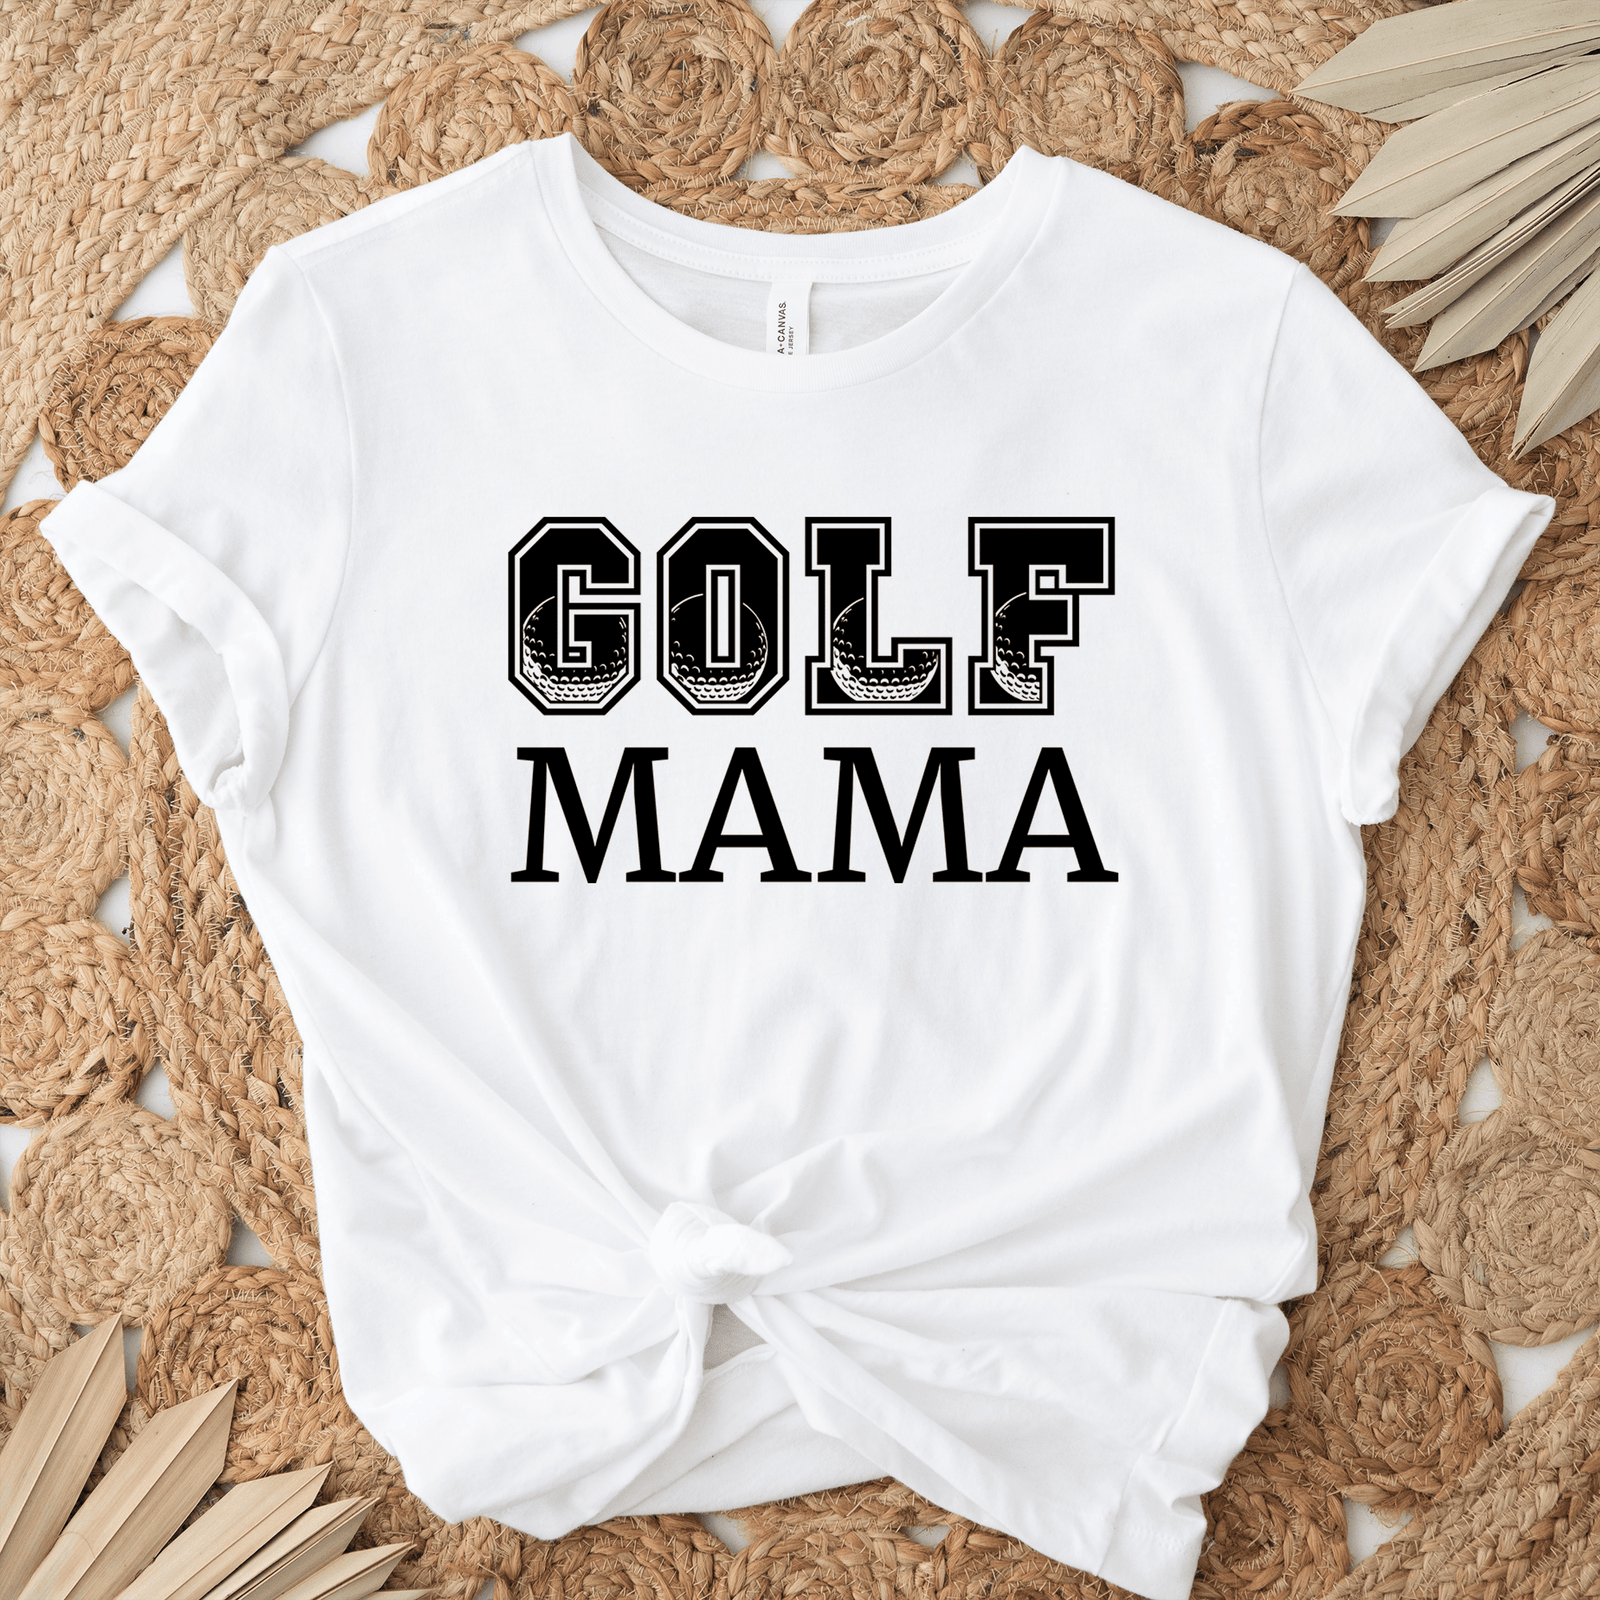 Womens White T Shirt with Golf-Mama design